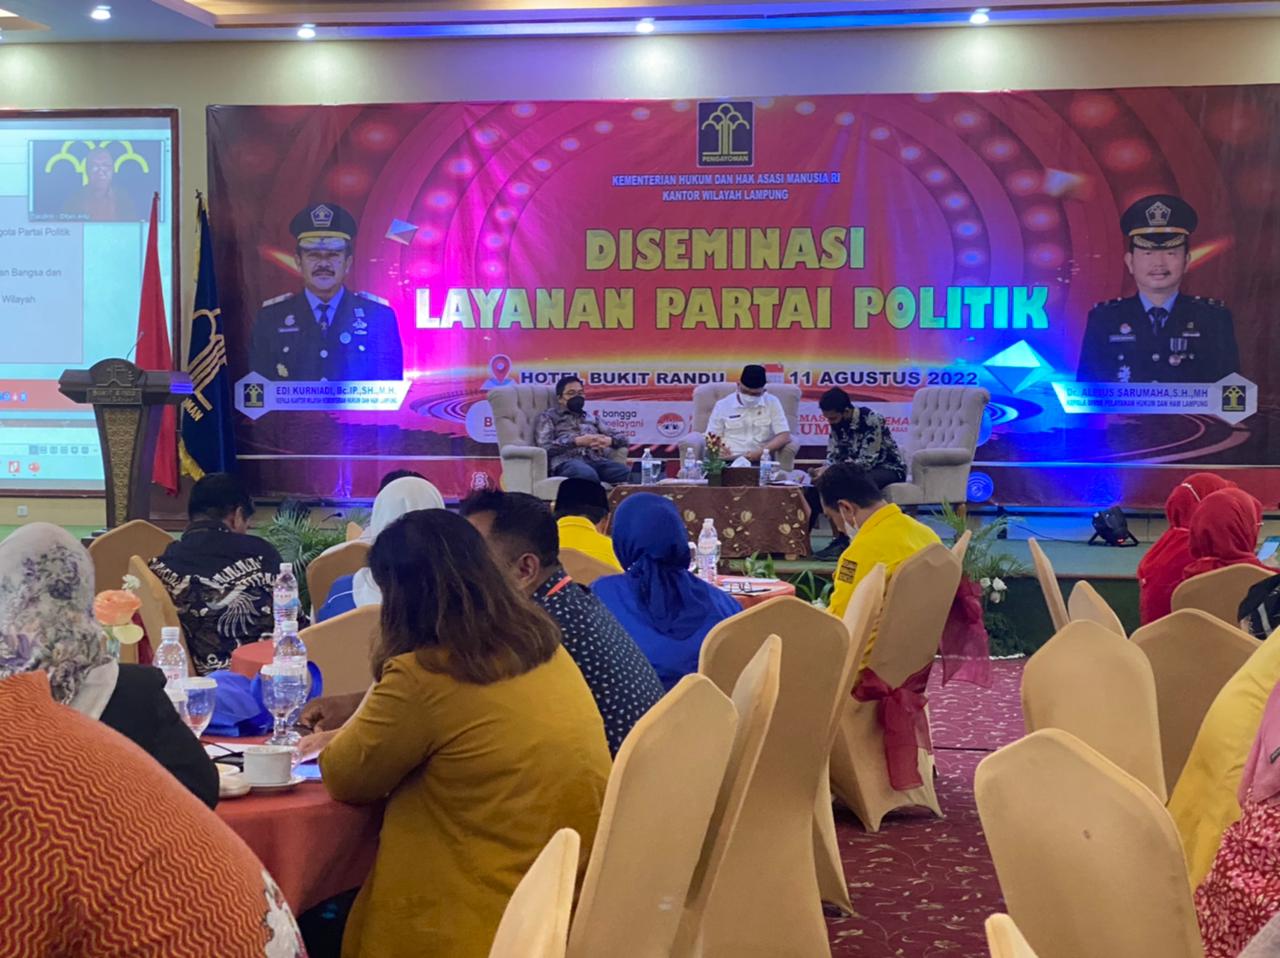 Kanwil Kemenkumham Lampung Berikan Solusi Layanan Diseminasi Partai Politik